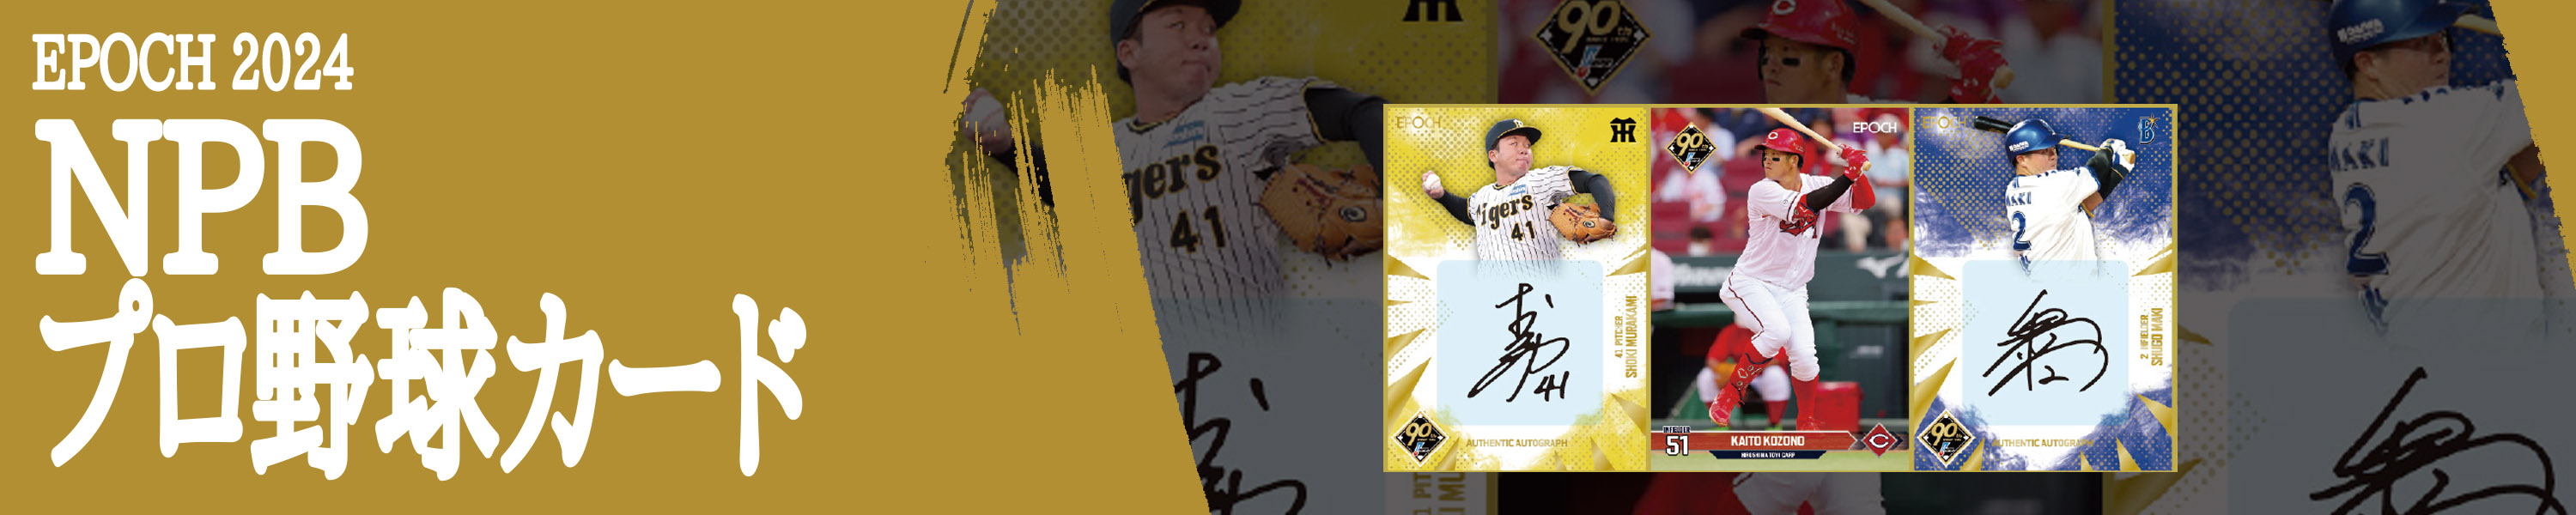 【TC BOX】EPOCH 2024 NPB プロ野球カード